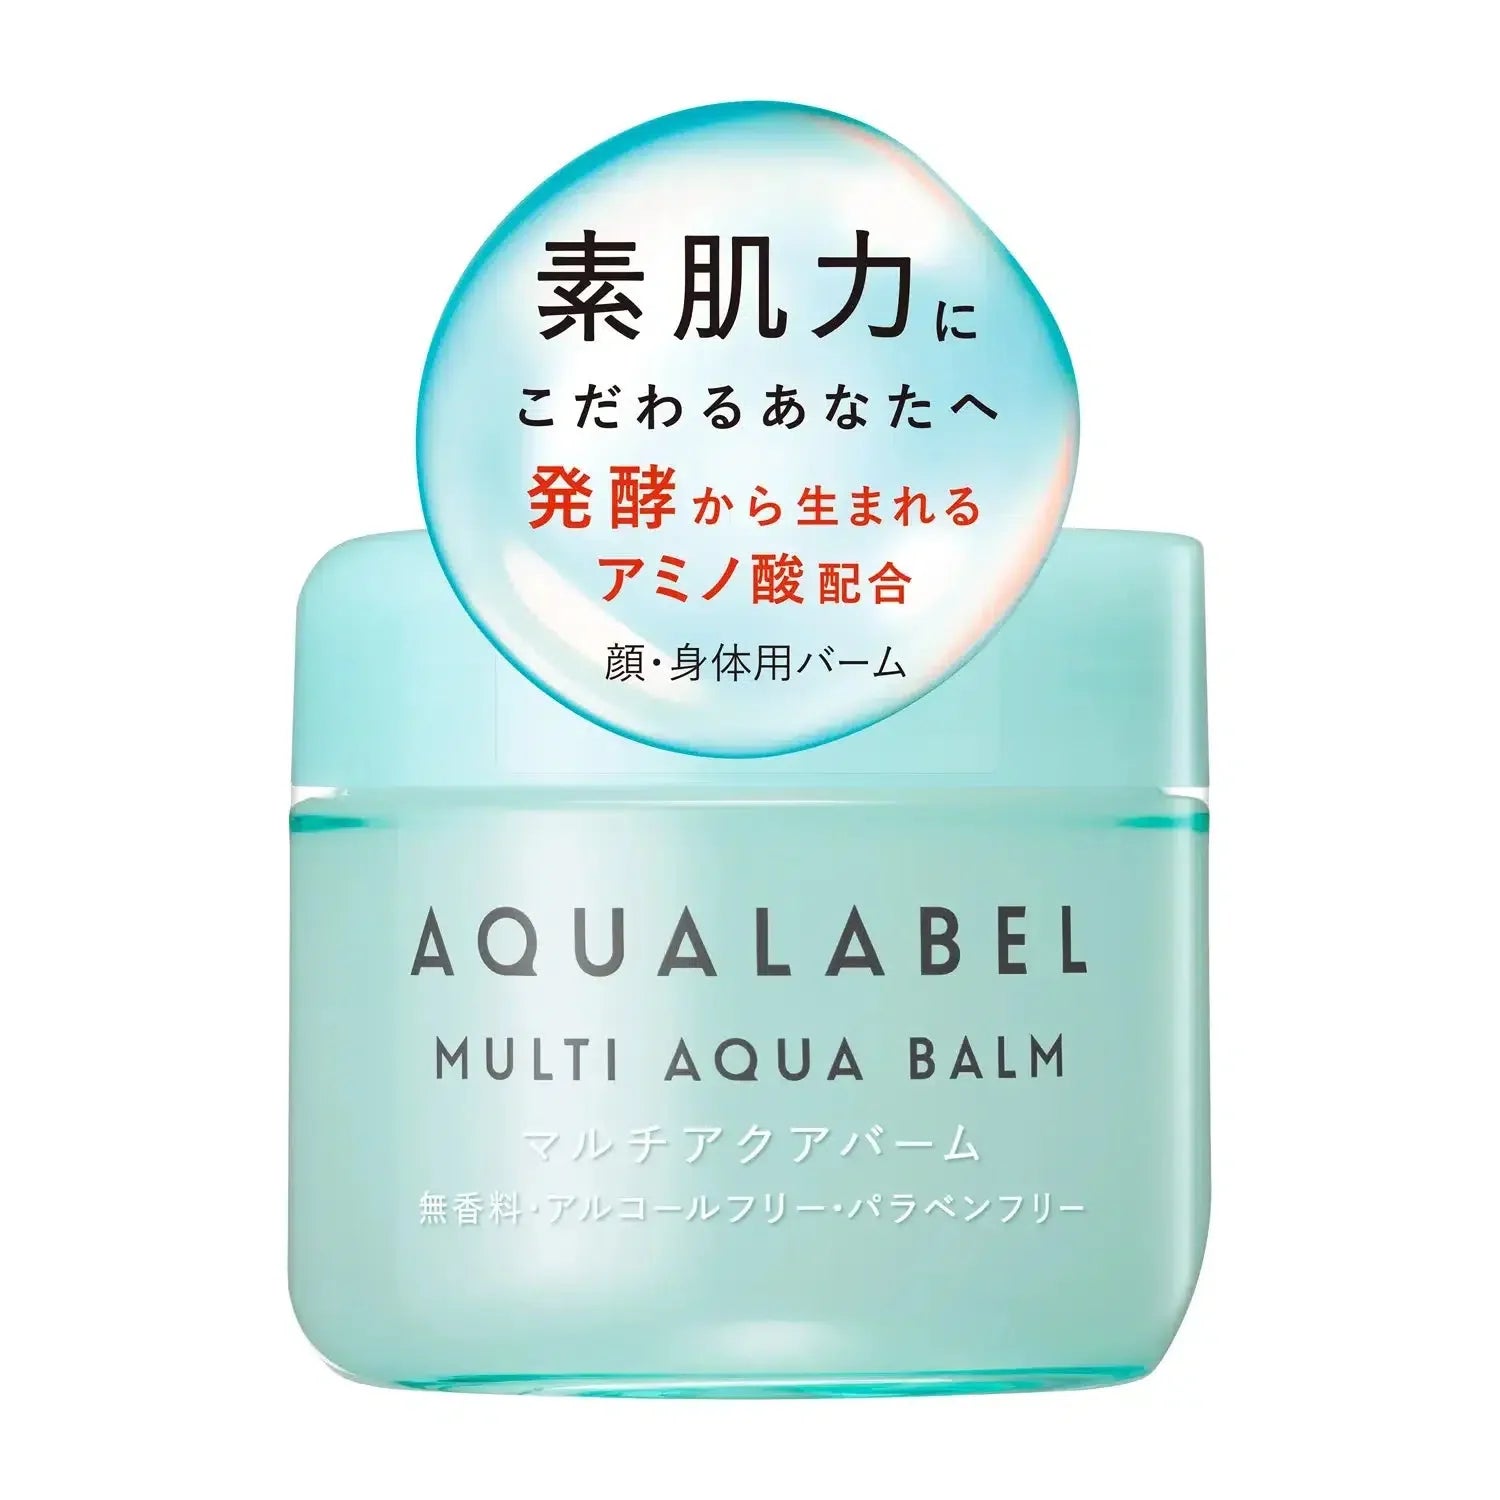 Shiseido Aqualabel Multi Aqua Balm Hydrating Cream For Face & Body 100g